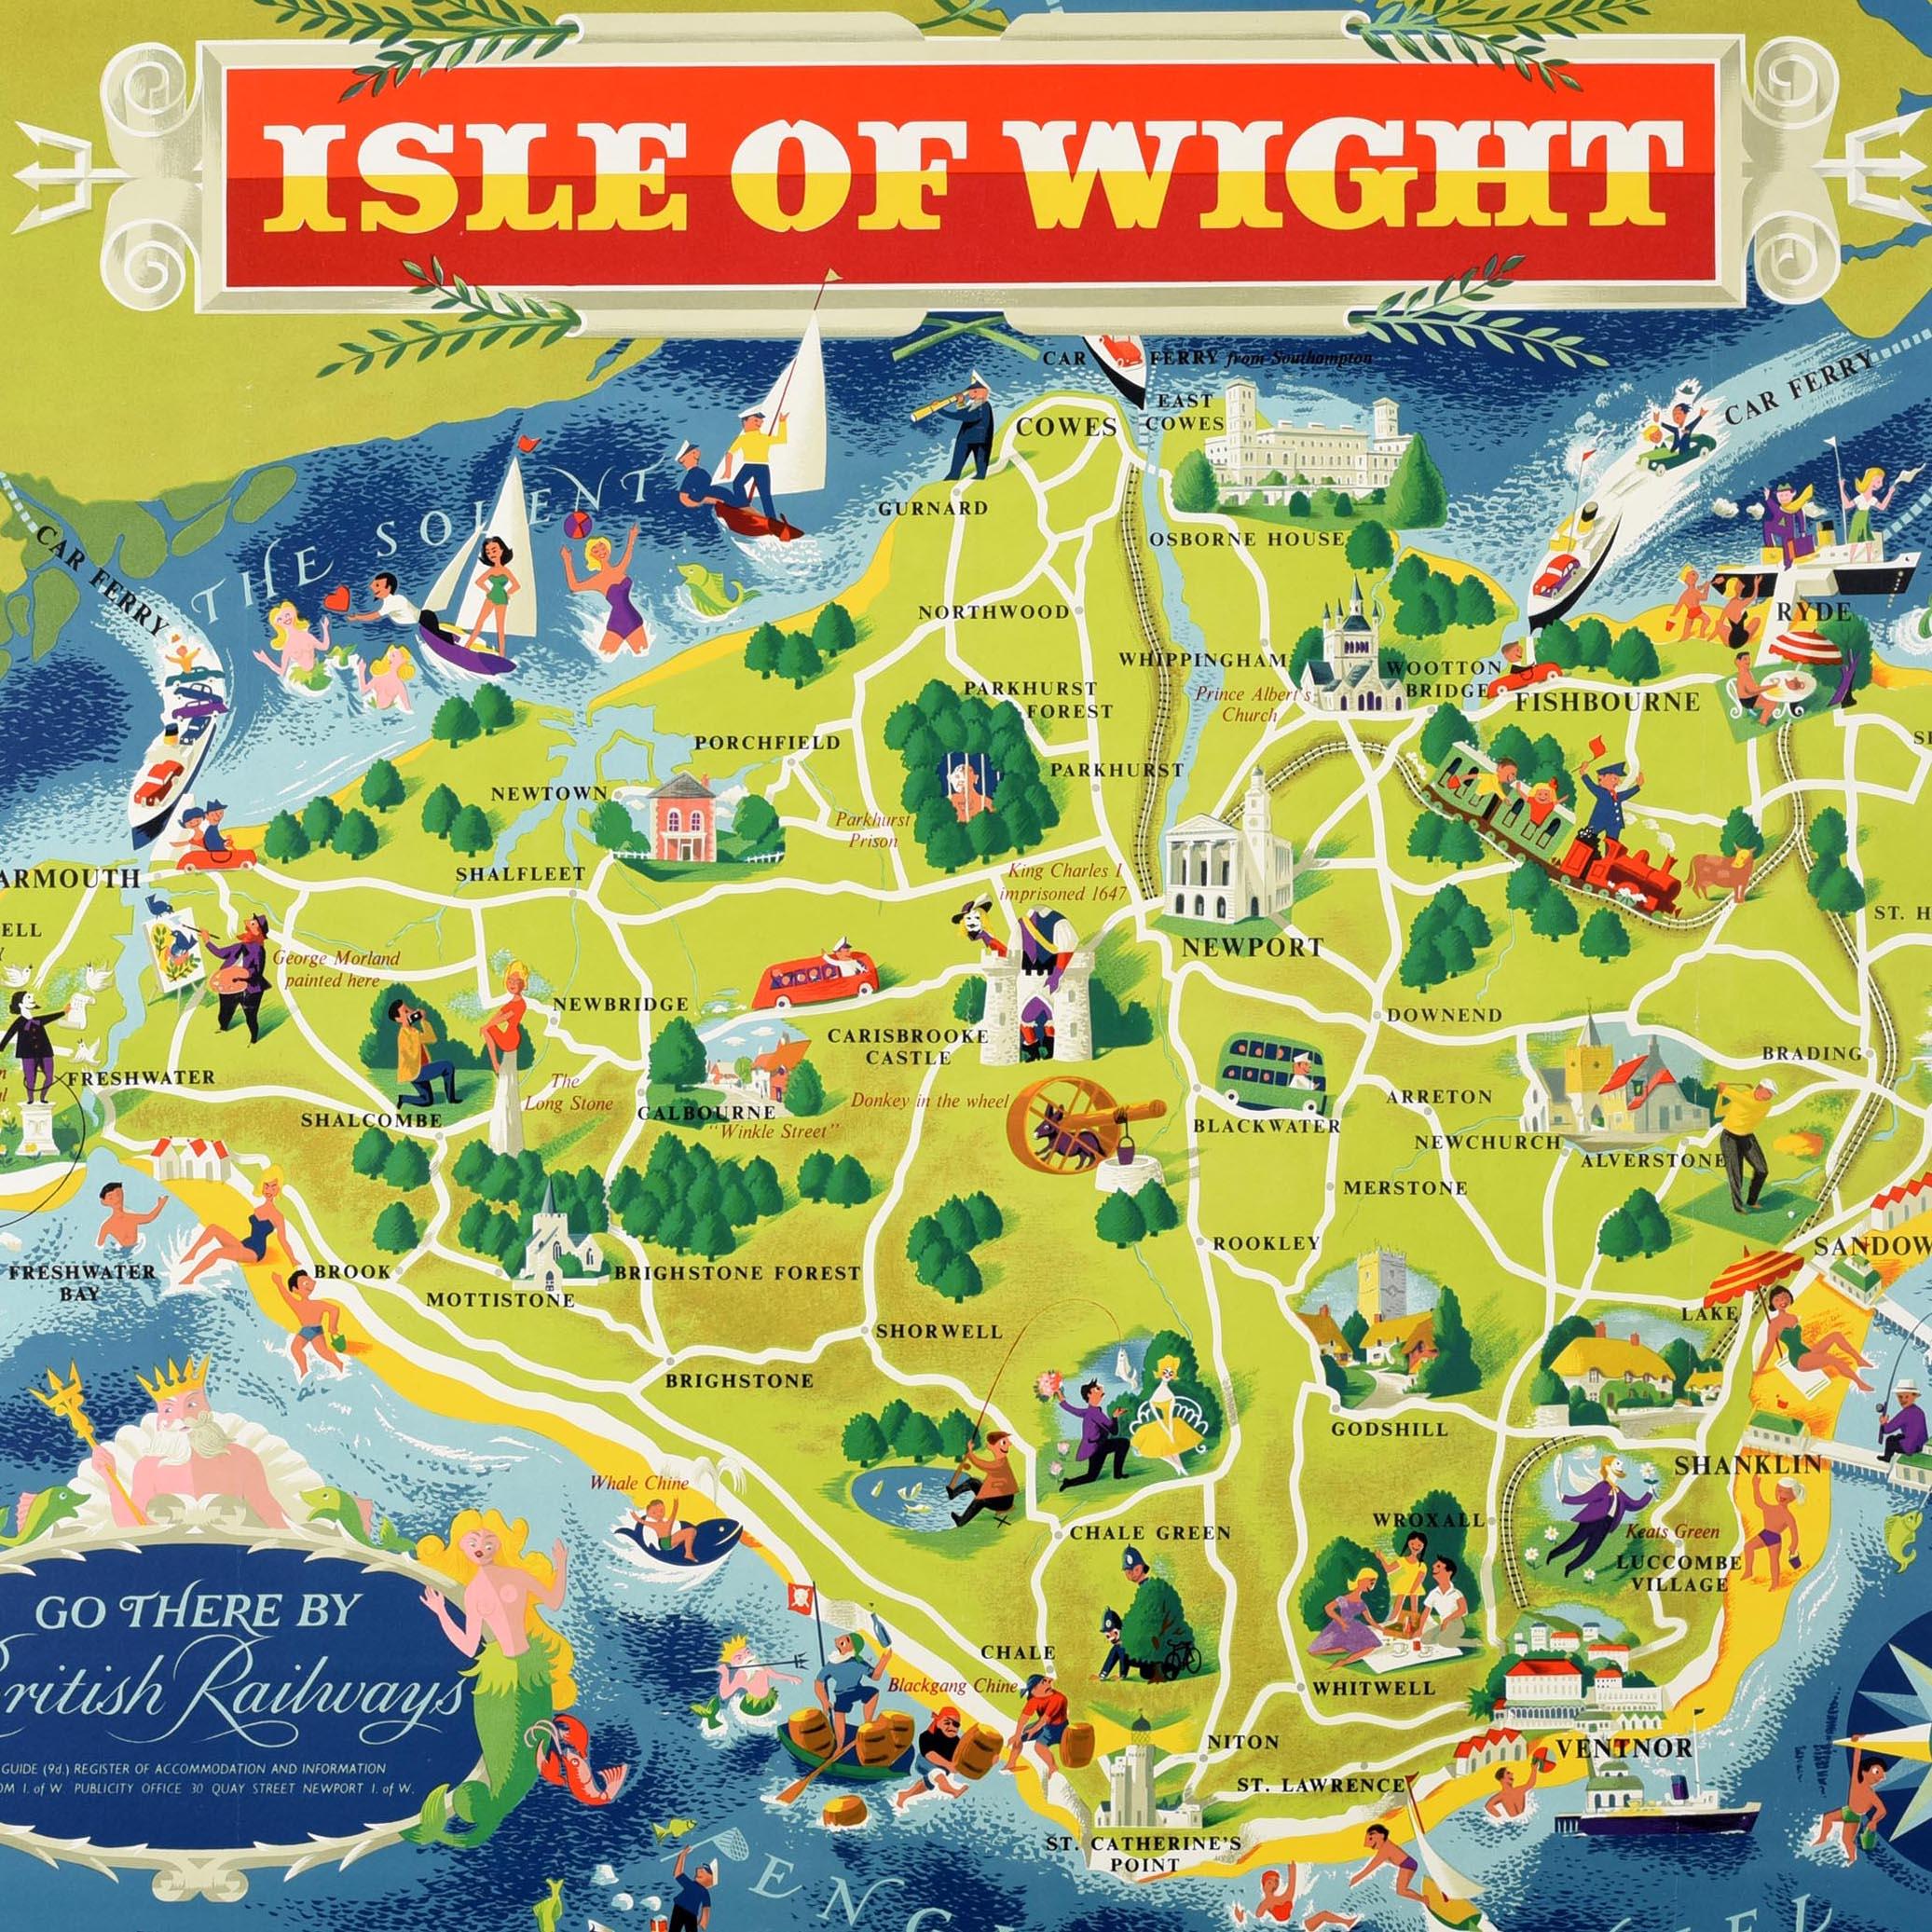 Original Vintage Travel Poster Isle Of Wight Pictorial Map British Railways Art - Print by Reginald Lander